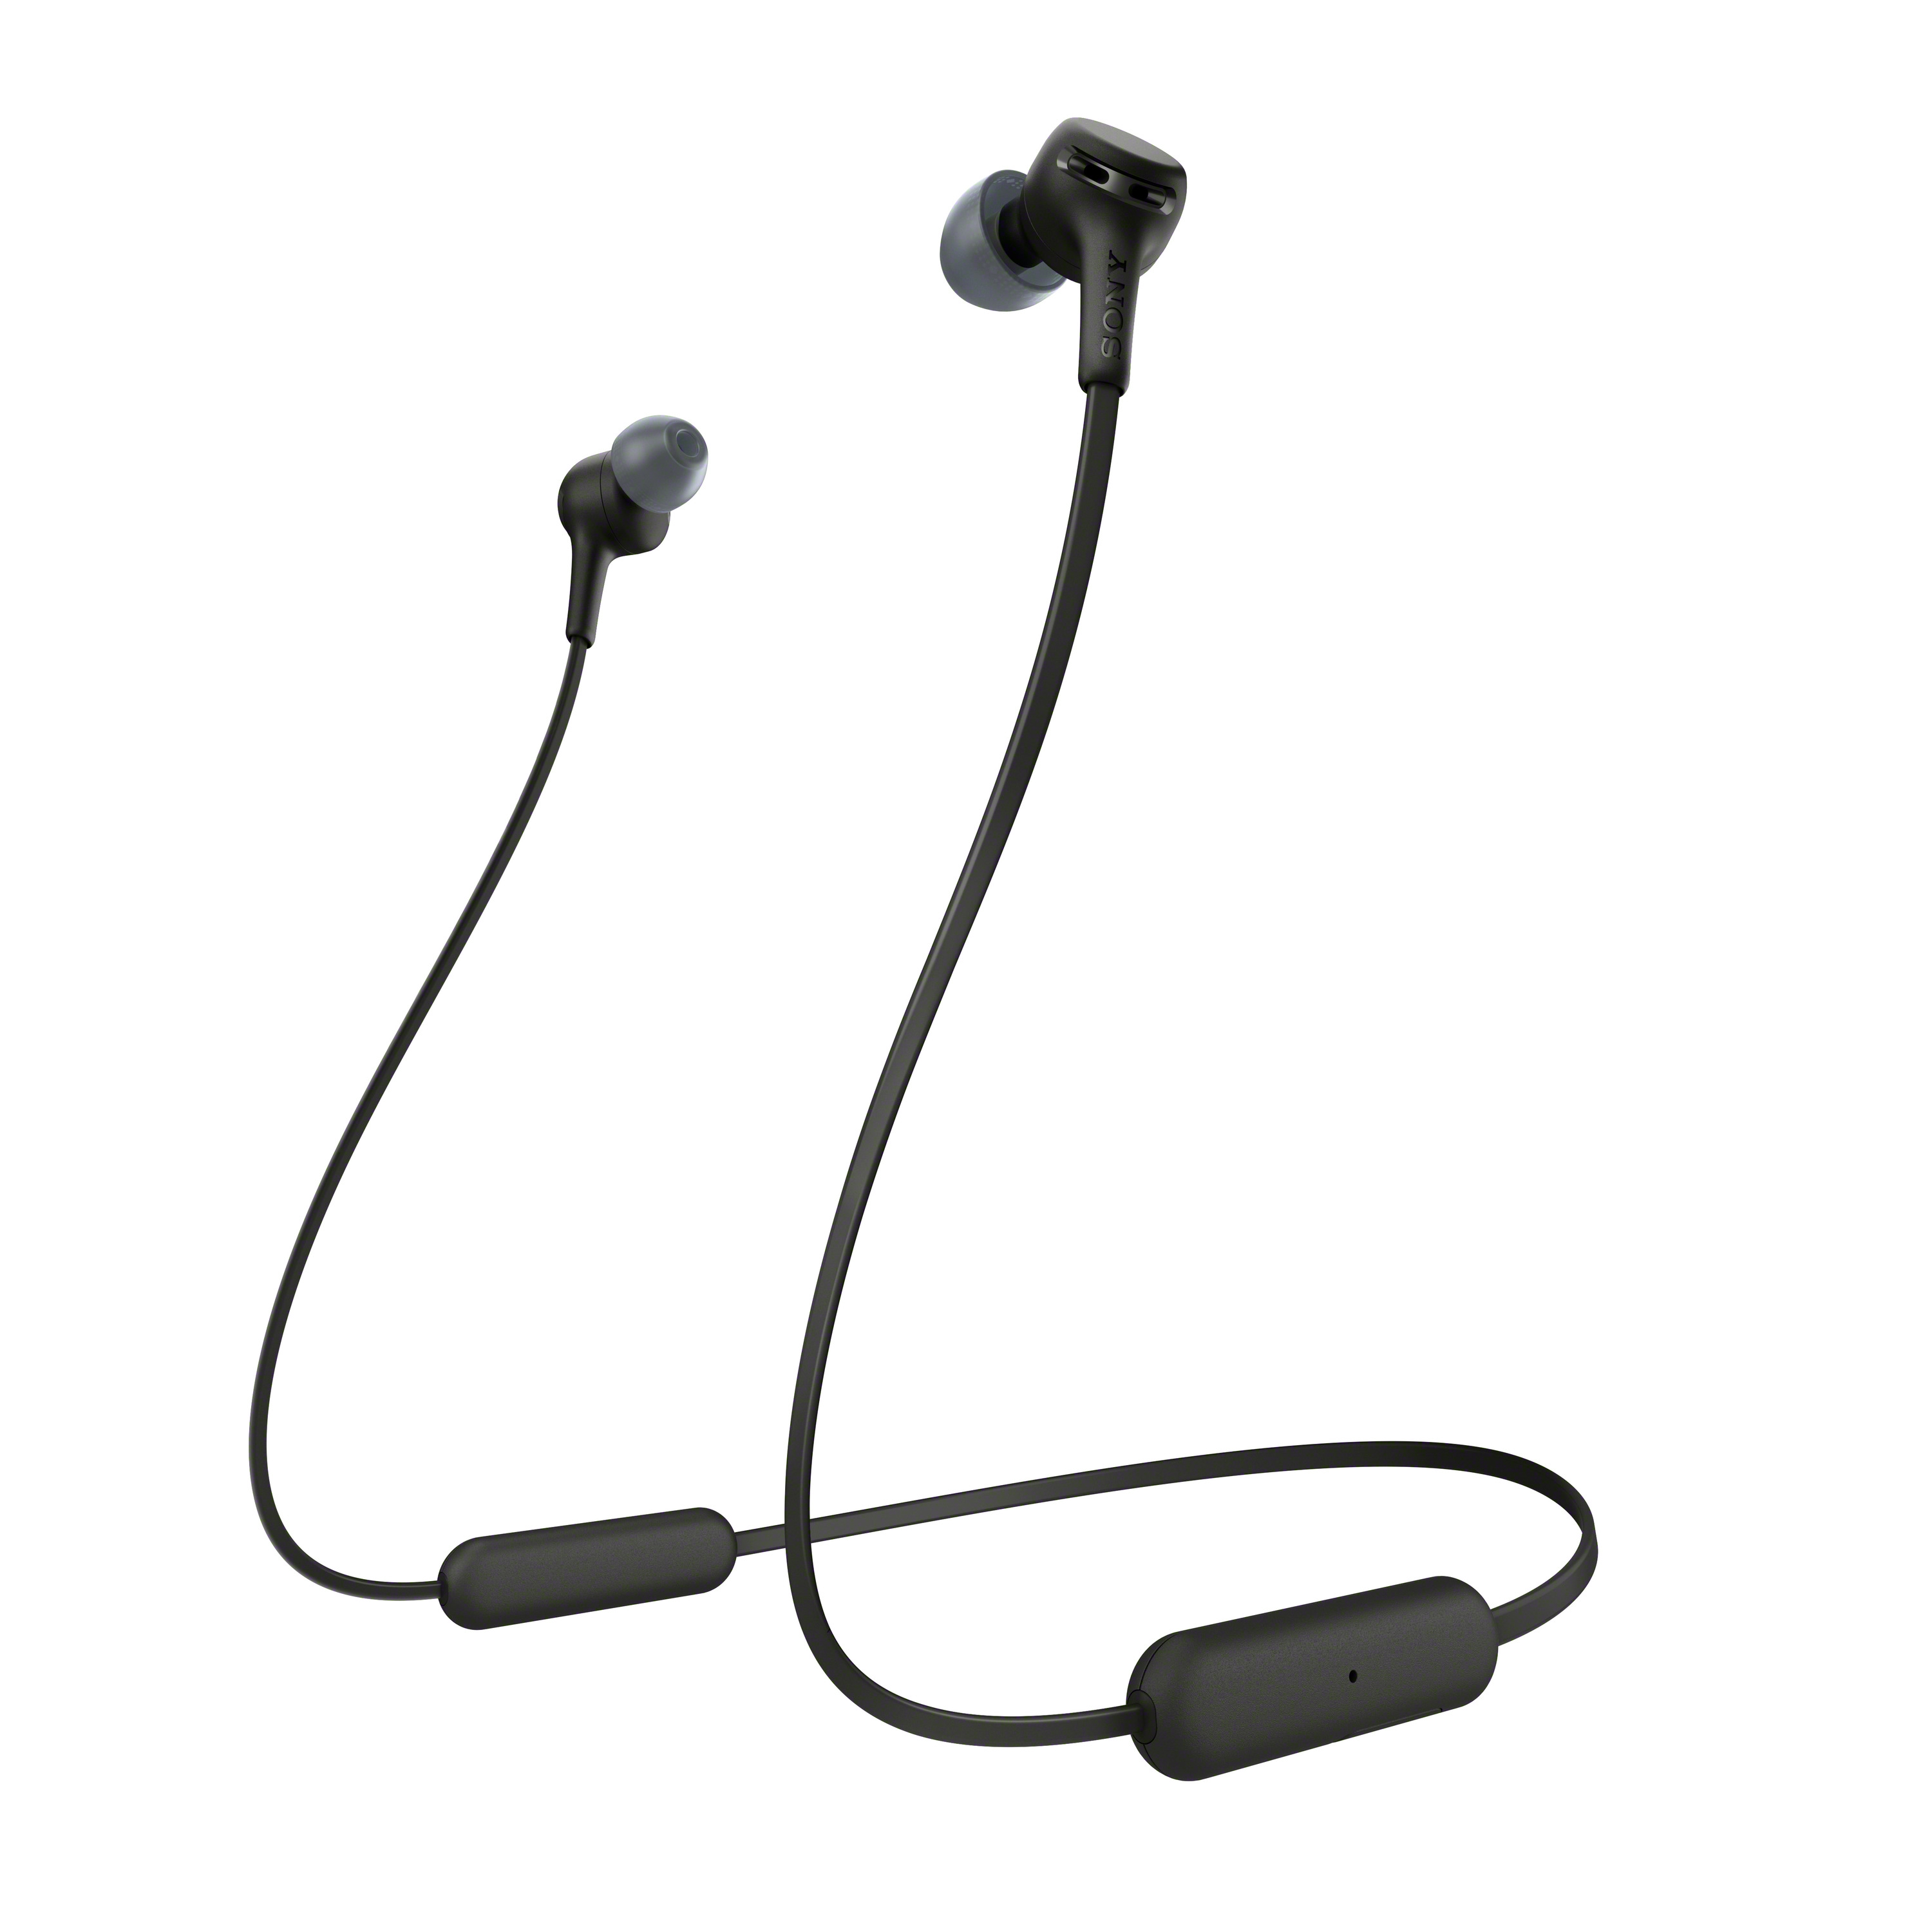 Sony WIXB400/B Wireless In Ear Headphones Built In Microphone Black - image 1 of 9